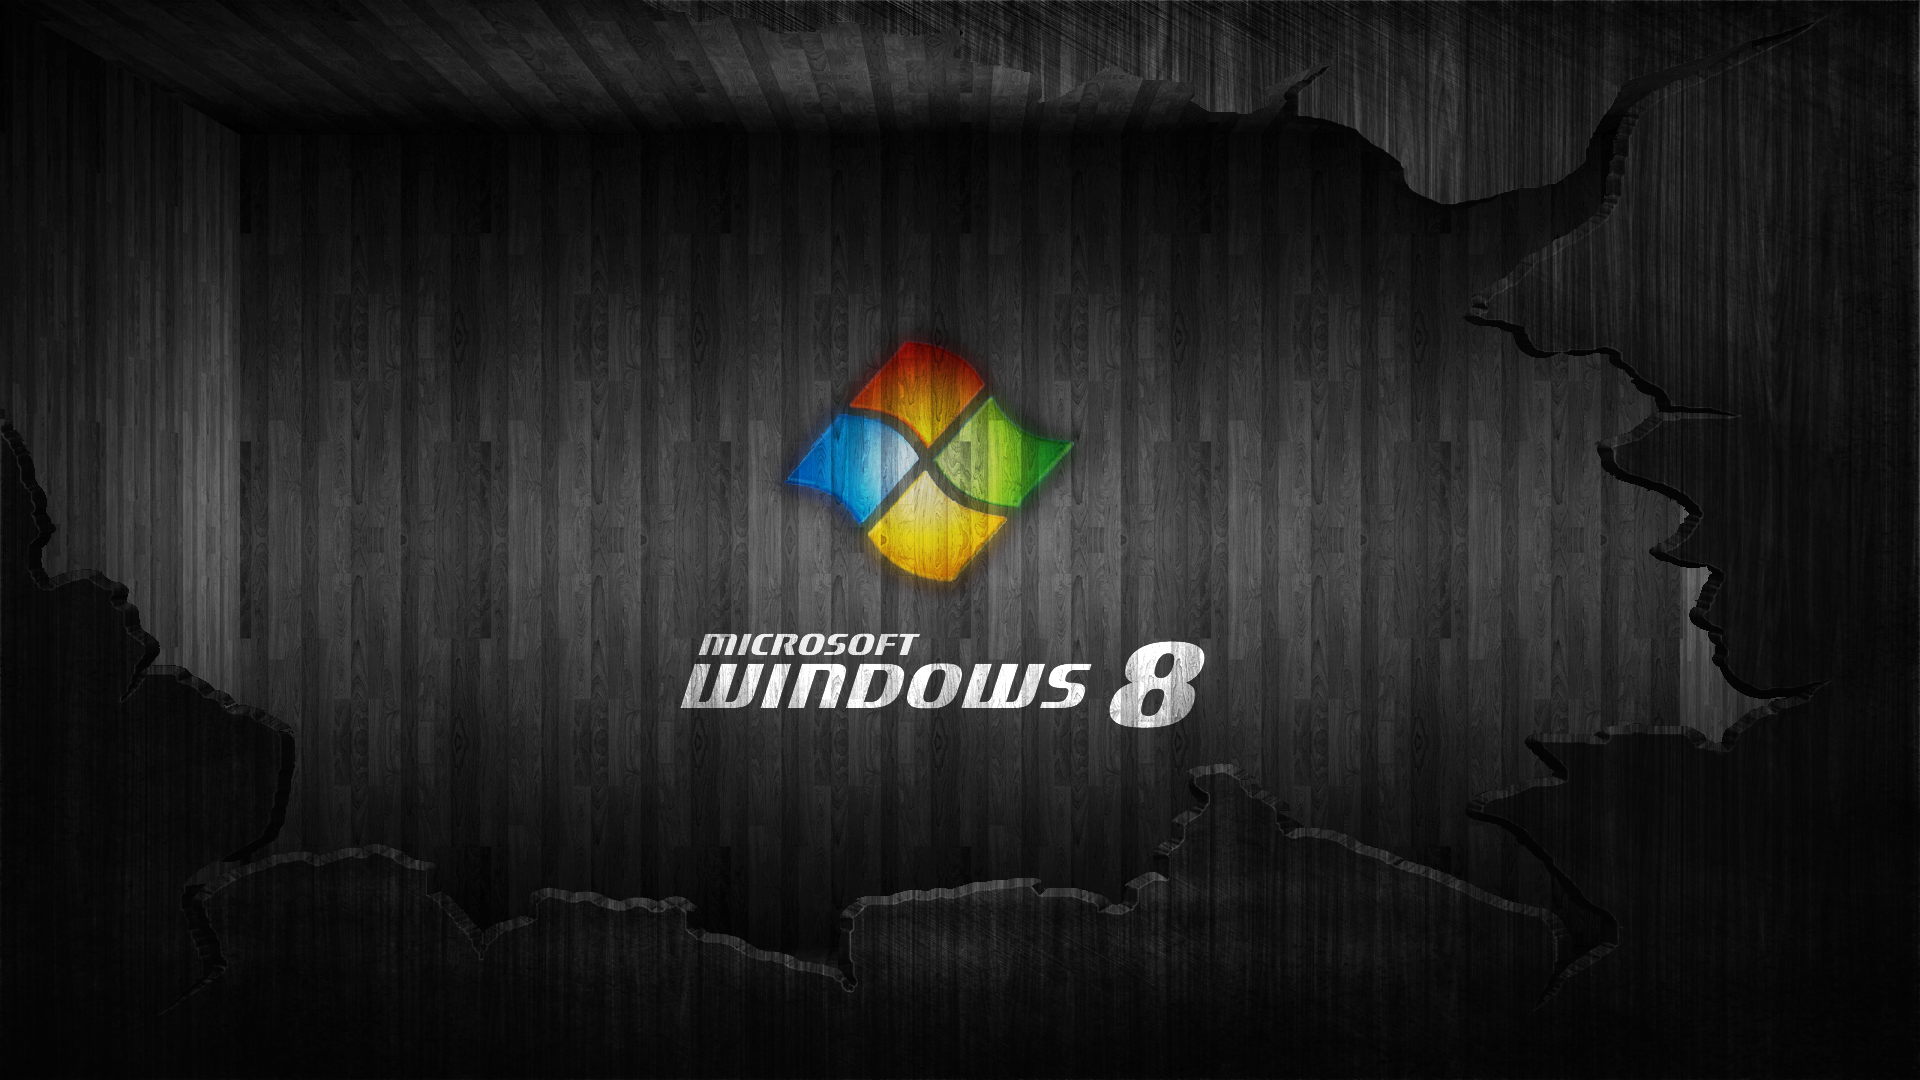 windows 8 wallpaper hd 1080p free download #9